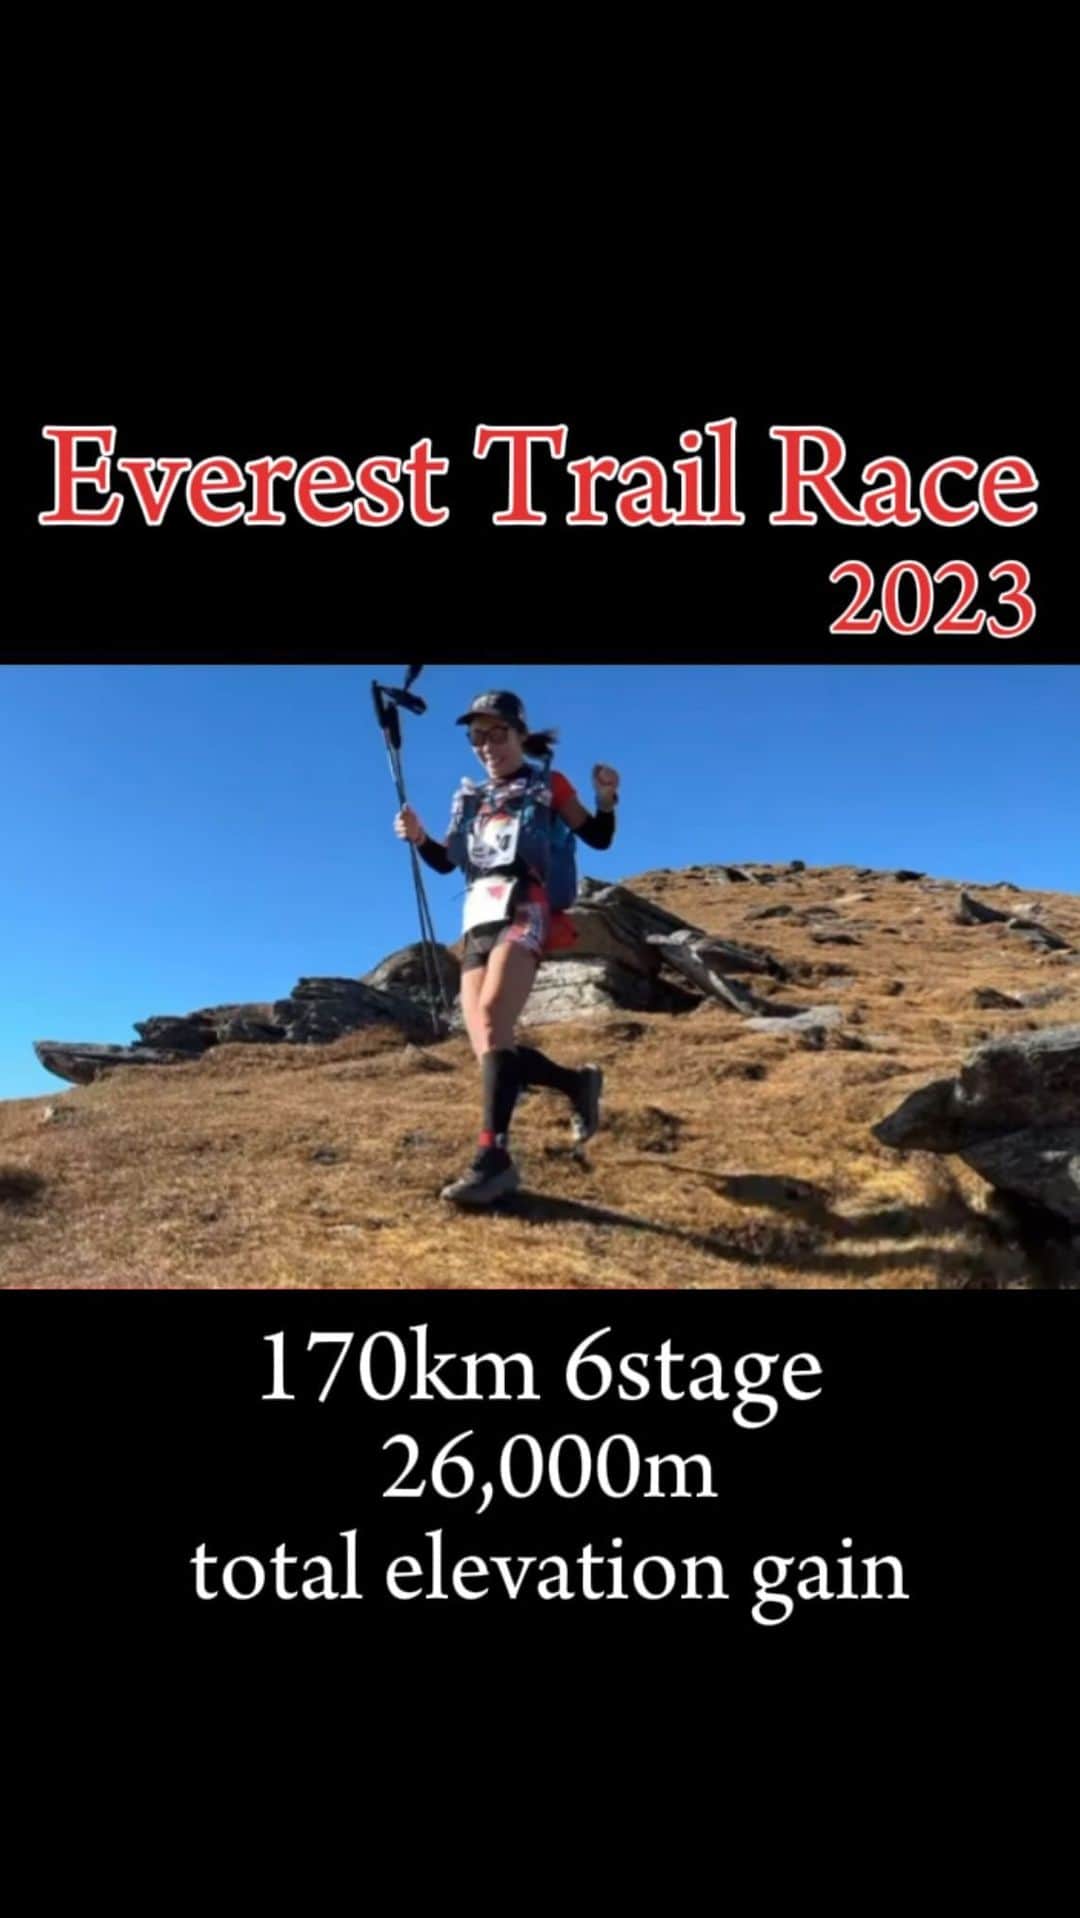 TOMOMIのインスタグラム：「#Everest Trail Race 🏔️🇳🇵🏃‍♀️✨ 170km 6stage 26,000m ±  I finished the race for the first time in Japan🇯🇵🏃‍♀️✨  Thank you for everyone ❤️🤝 @everesttrailrace   🏔️ @merrelltestlab @merrell  global athlete🏃‍♀️  Special thanks🤝✨ 【#pointpay 】 超お得なポイントサイト🎉 このサイトを使えば 🉐尾藤朋美の応援グッズ10%オフで買えちゃいます！✨ @pointpay.official   【#SPOT 🛰️ #Globalstar 】 私たちの安全を確保してくれる衛星端末！✨ エベレストや電波がない世界でもこの子がいれば安心です☺️💕🌏✨ @spot_llc  【#オレは摂取す】 5年前からひたすら愛用している 最高のエネルギー&リカバリージェル🍎🐟 @orehasesshusu   【#ファイテン】 最強の爆速リカバリー出来ちゃうアイテム充実❤️✨ @phiten_official  💆‍♀️スキンケアは #アクアゴールドシリーズ ✨ 浴びまくる紫外線も乗り切ります🥹🏜️！ @aquagold_official  【#GLOBALWi-Fi 】 海外行くなら安心安定のレンタルWi-Fi🥹✨ めちゃめちゃ助けられております！✨ @globalwifi_official  #Nepal #Everest  #athlete #running #marathon #trail #trailrunning #mountain #japan #runner  #エベレスト #ネパール #ウルトラトレイル #尾藤朋美  #日本代表 #アスリート #ランナー #トレイルランナー #マラソン #トレイルランニング」